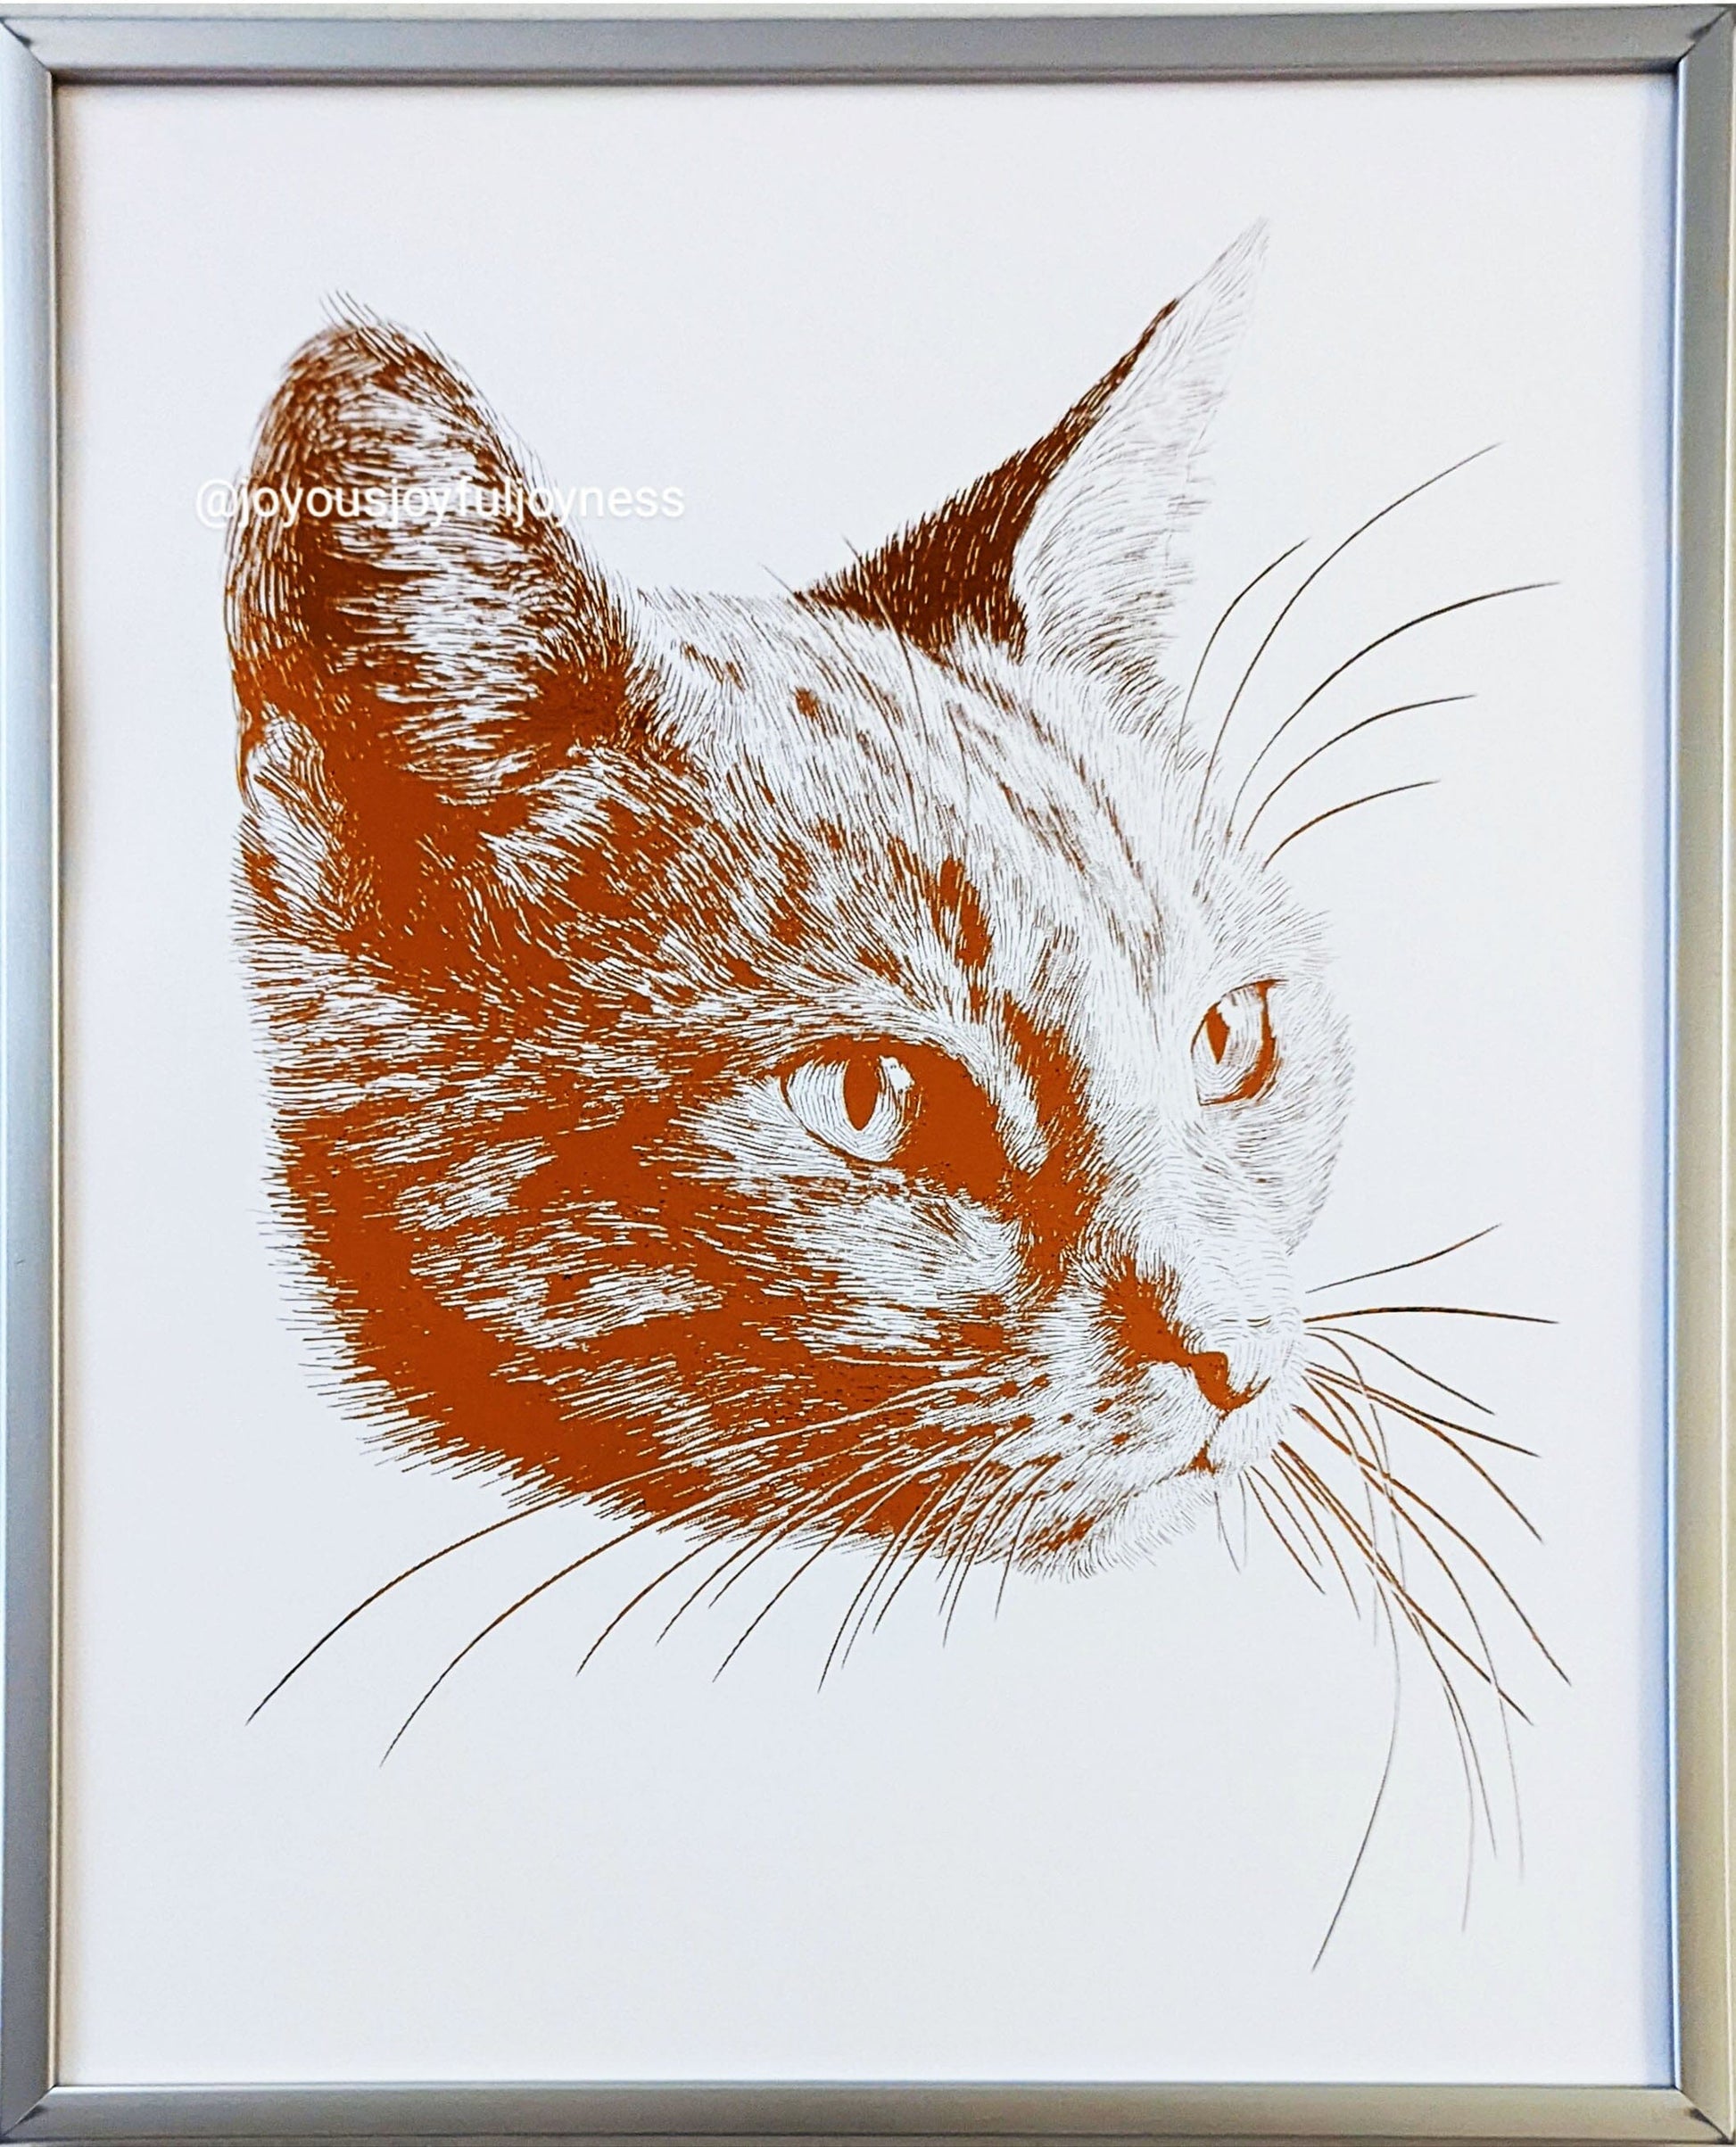 Custom Cat Art Posters, Prints, & Visual Artwork JoyousJoyfulJoyness 